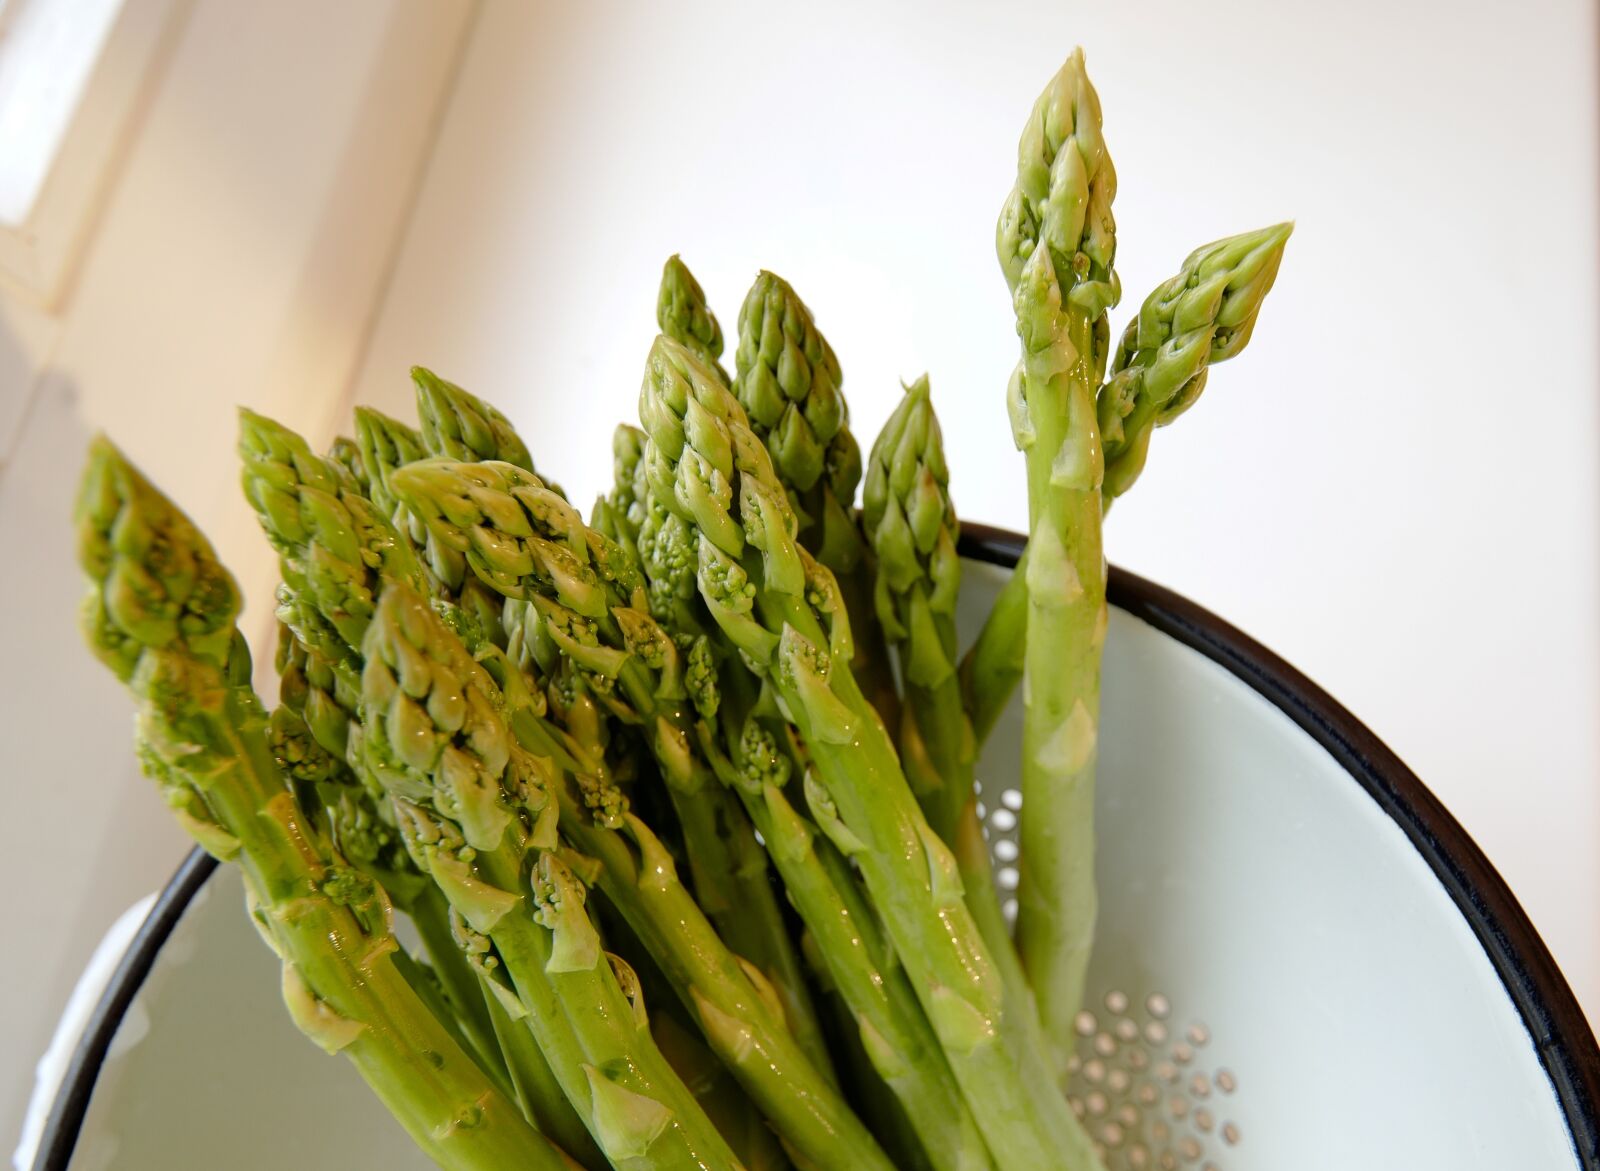 Super-Vario-Elmar-TL  1:3.5-4.5 / 11-23 ASPH. sample photo. Green asparagus, asparagus, asparagus photography